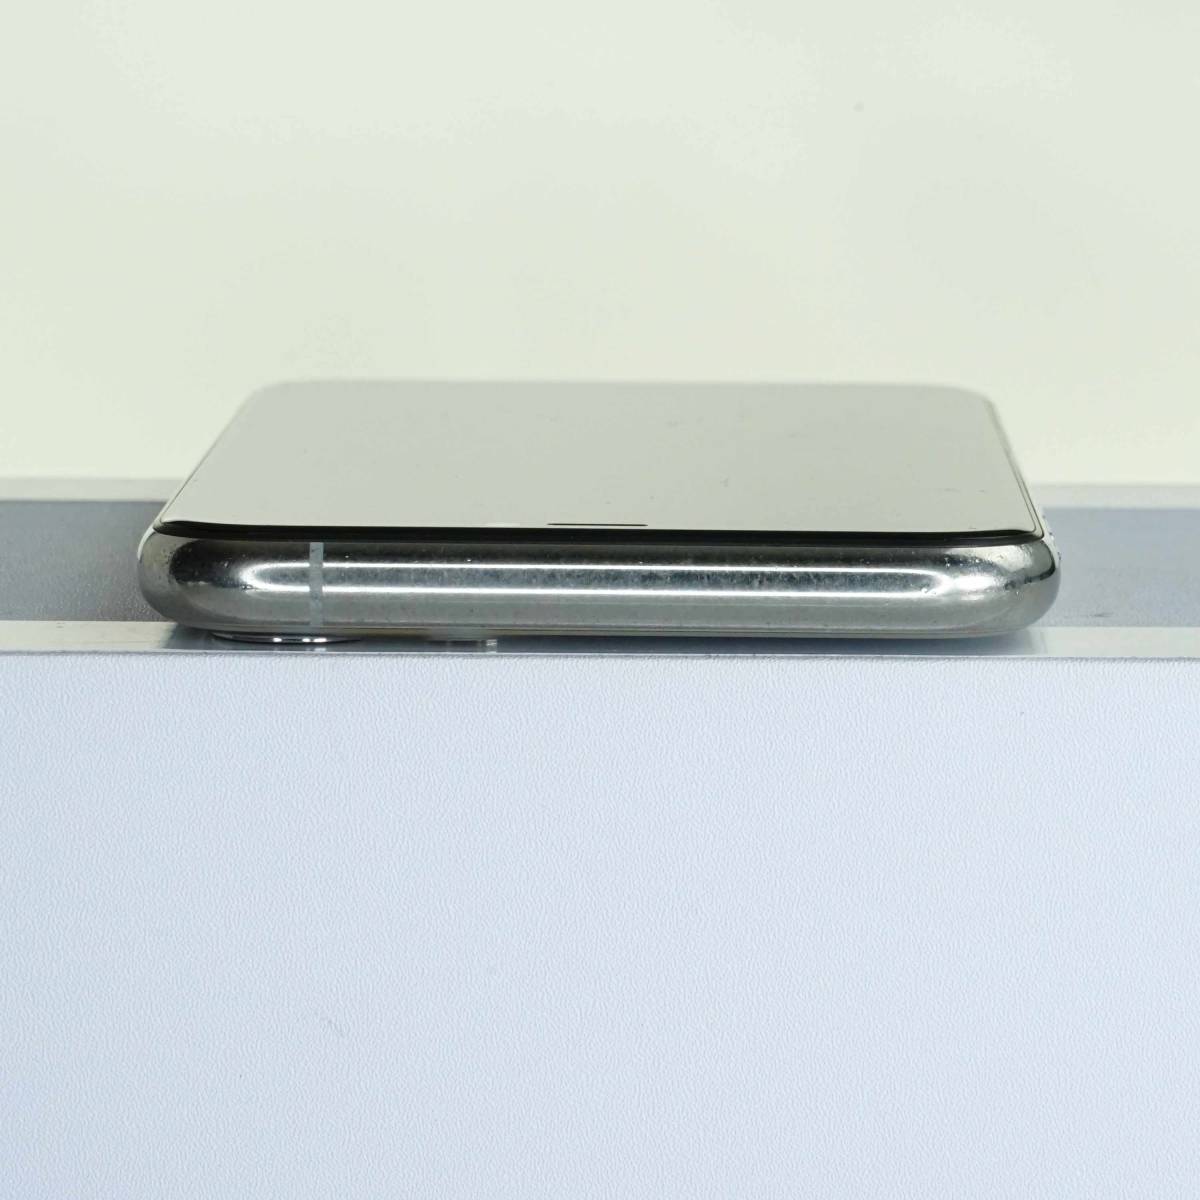 iPhone 11 Pro 256GB SIMフリ―シルバー 本体 訳あり品 MWC82J/A 白ロム(iPhone)｜売買されたオークション情報、yahooの商品情報をアーカイブ公開  - オークファン（aucfan.com）